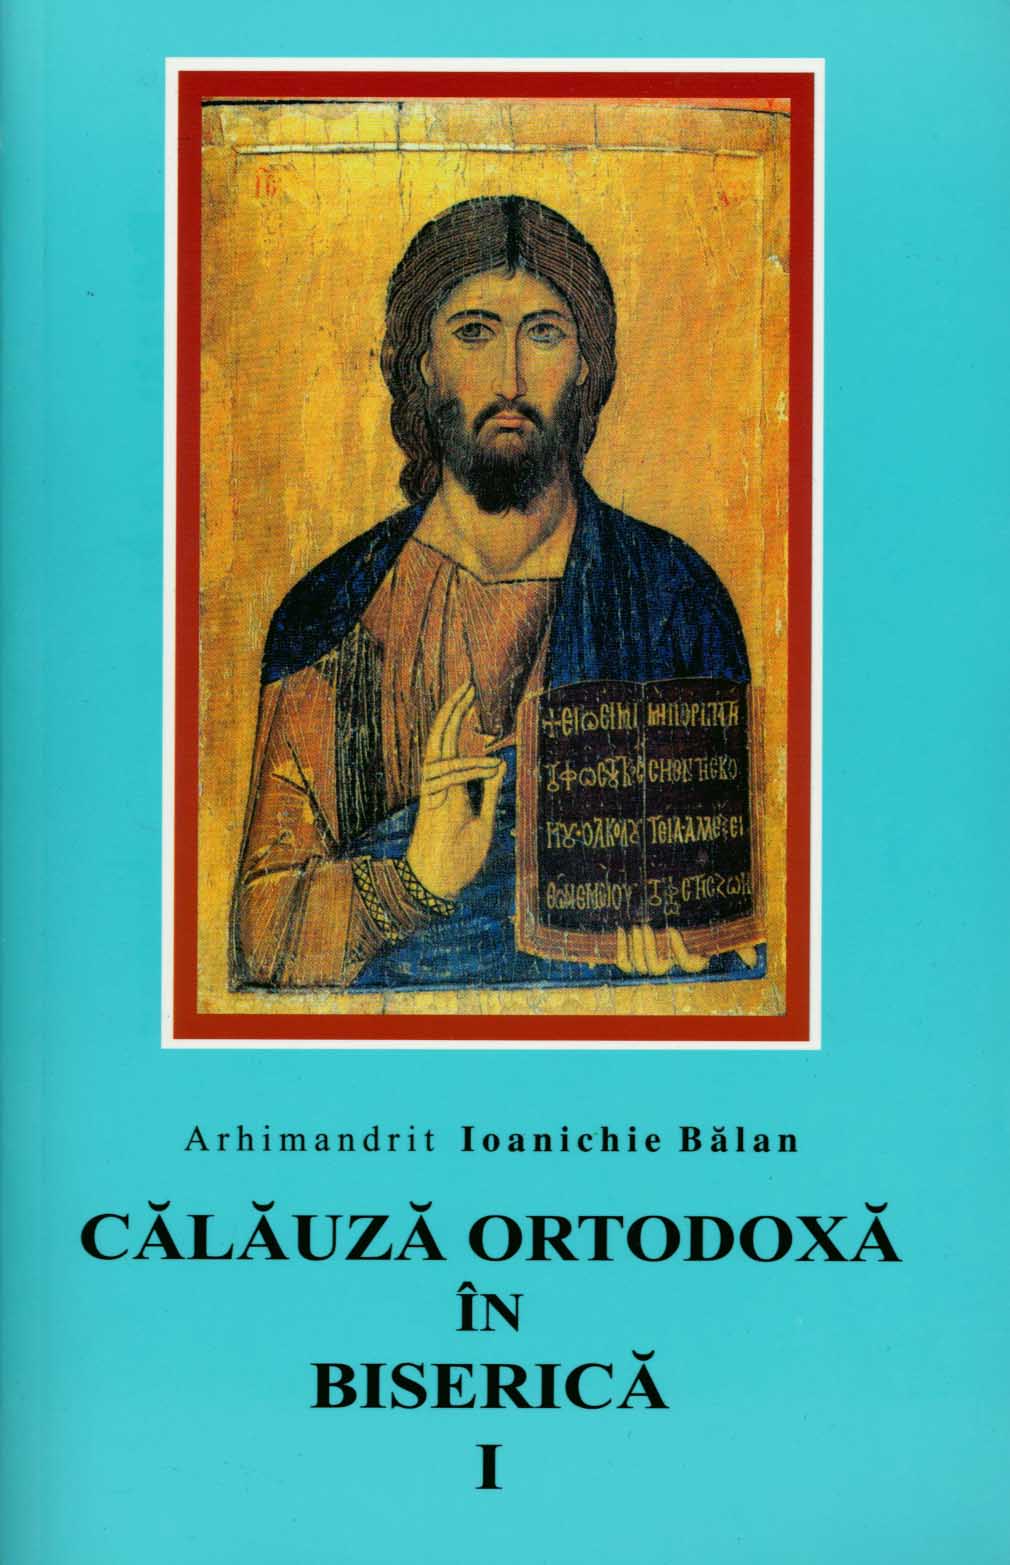 Calauza ortodoxa in biserica, vol. 1